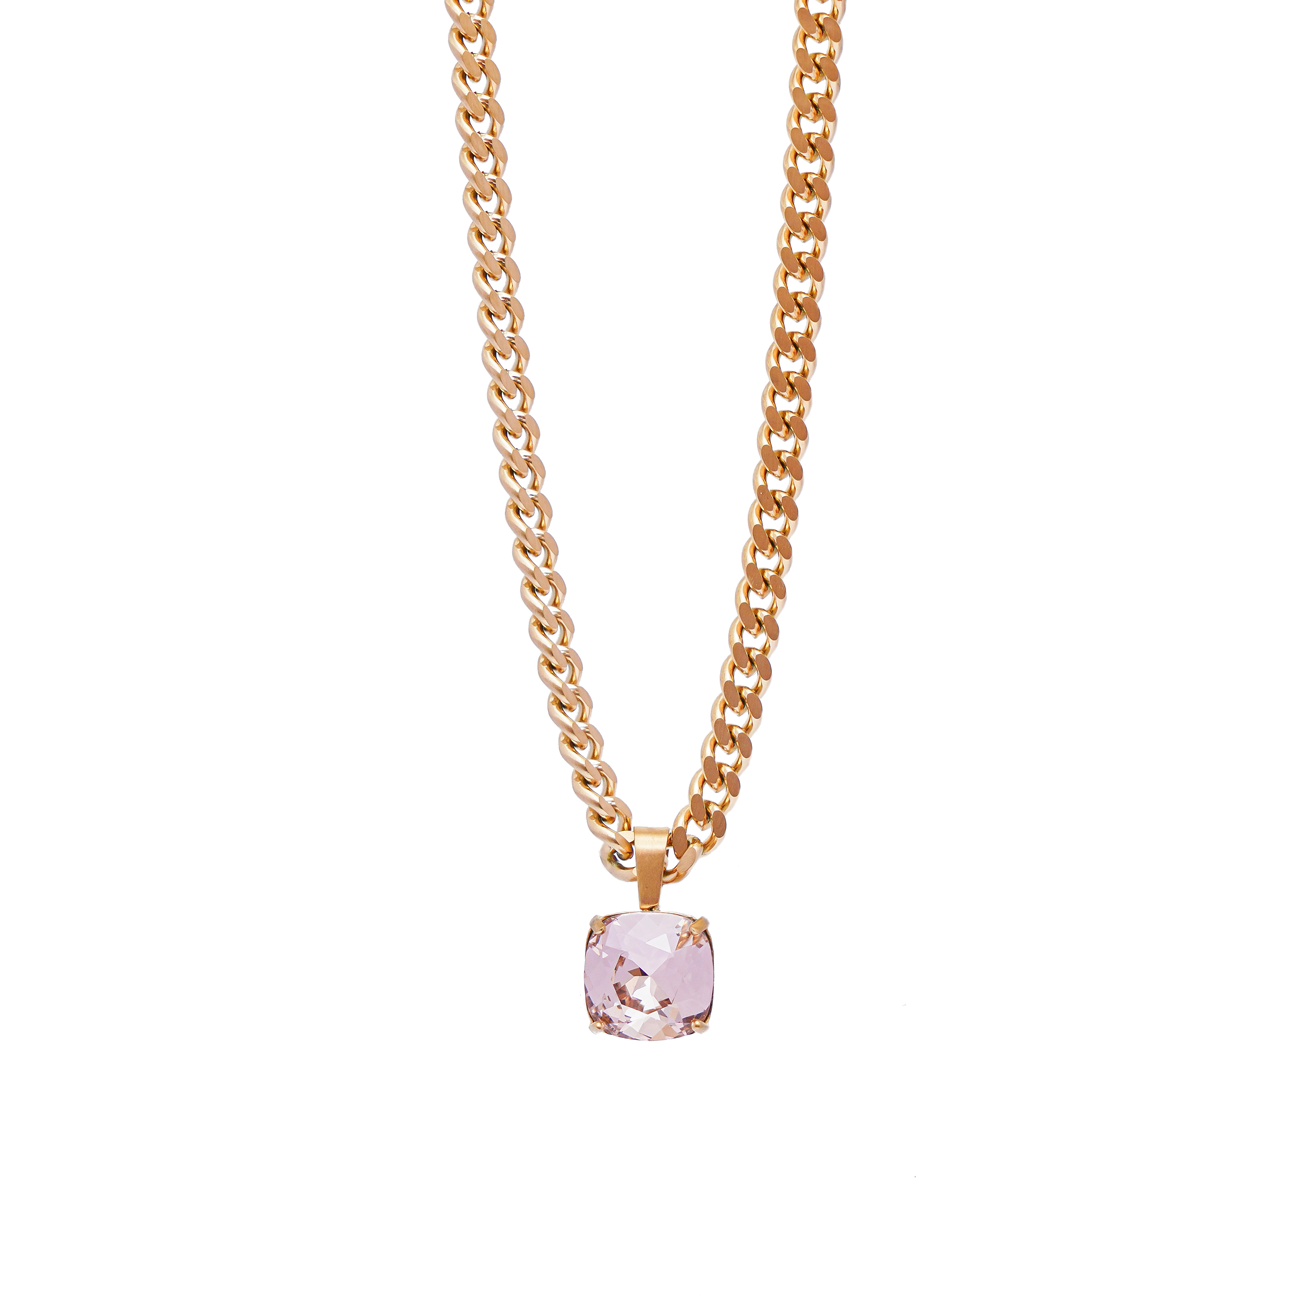 Carla Swarovski chain necklace - Vintage pink